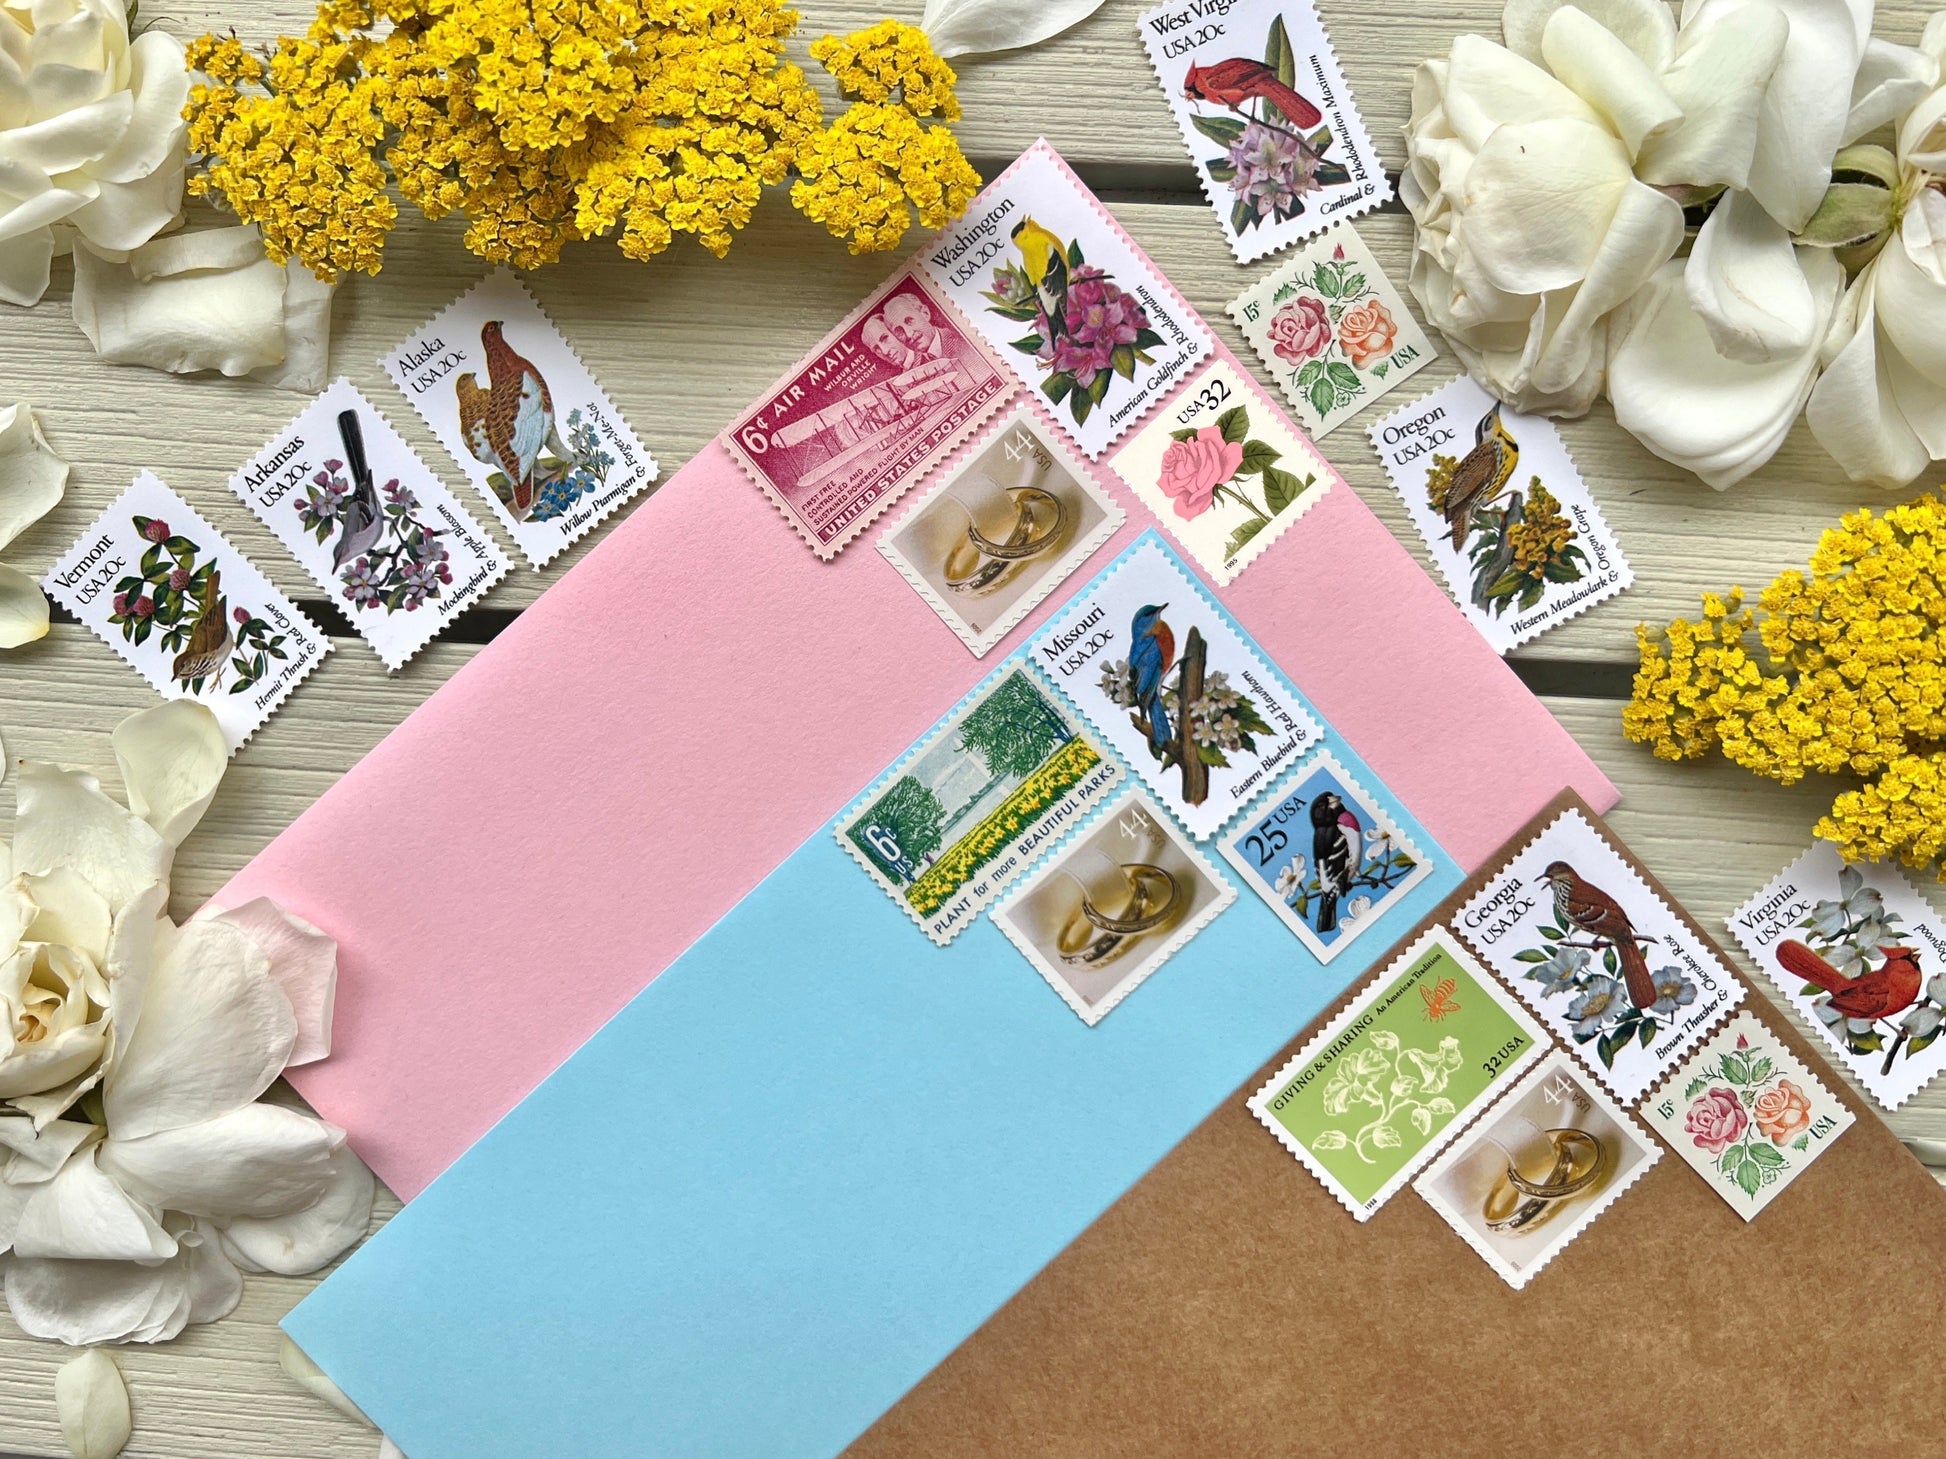 Canadian Brides - Cool Floral Stamps! : r/weddingplanning